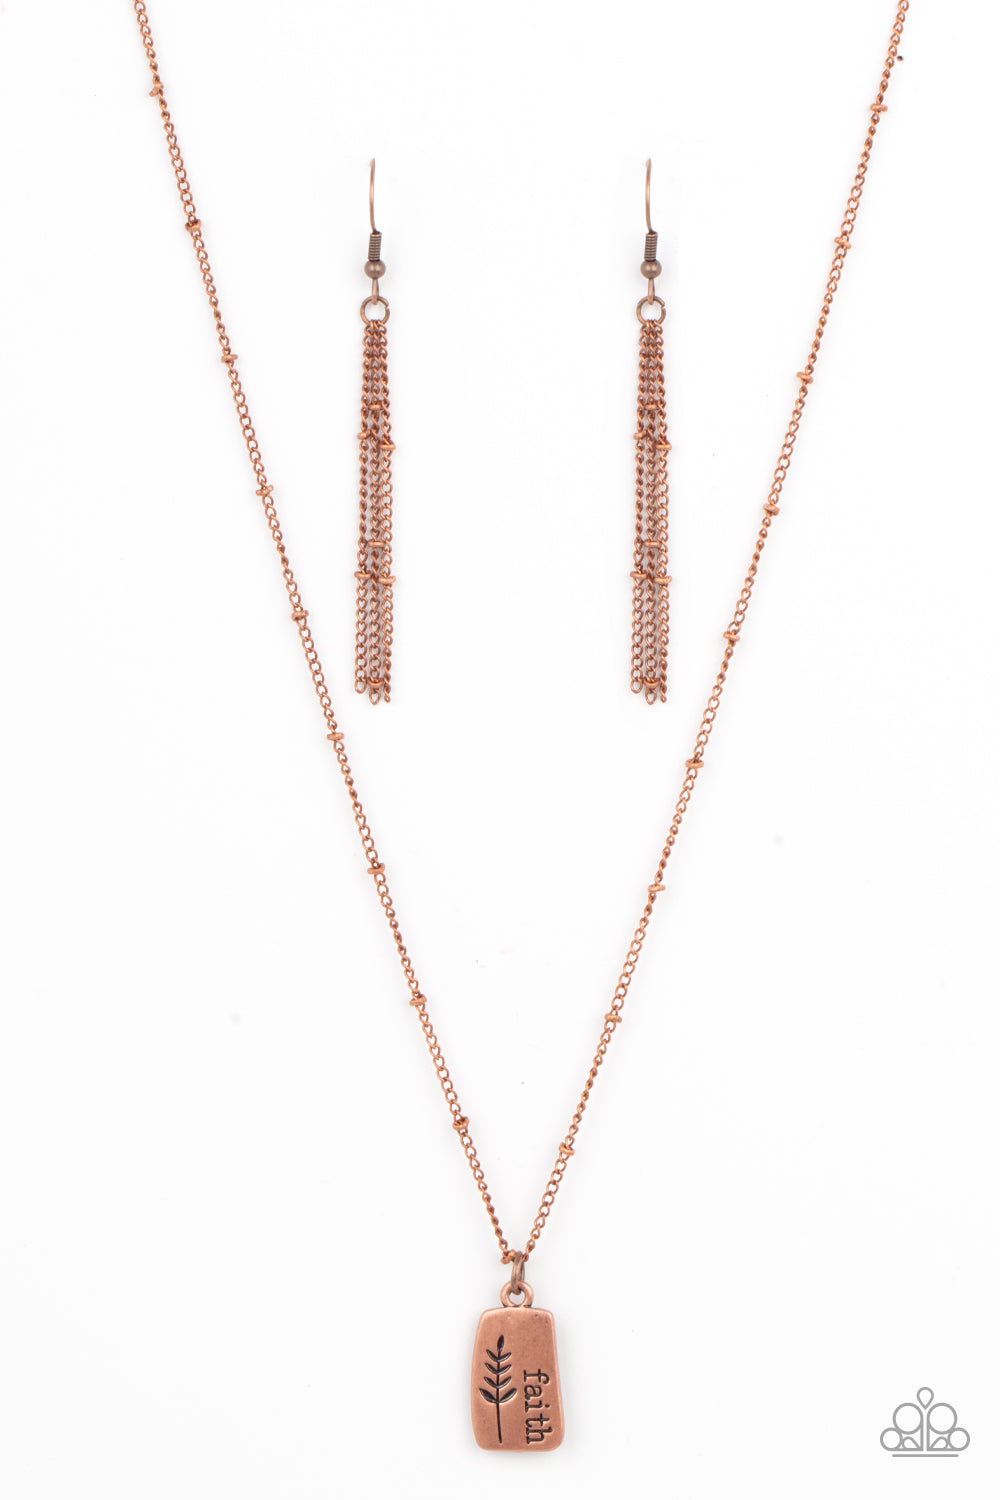 Faith Over Fear - Copper necklace 1602